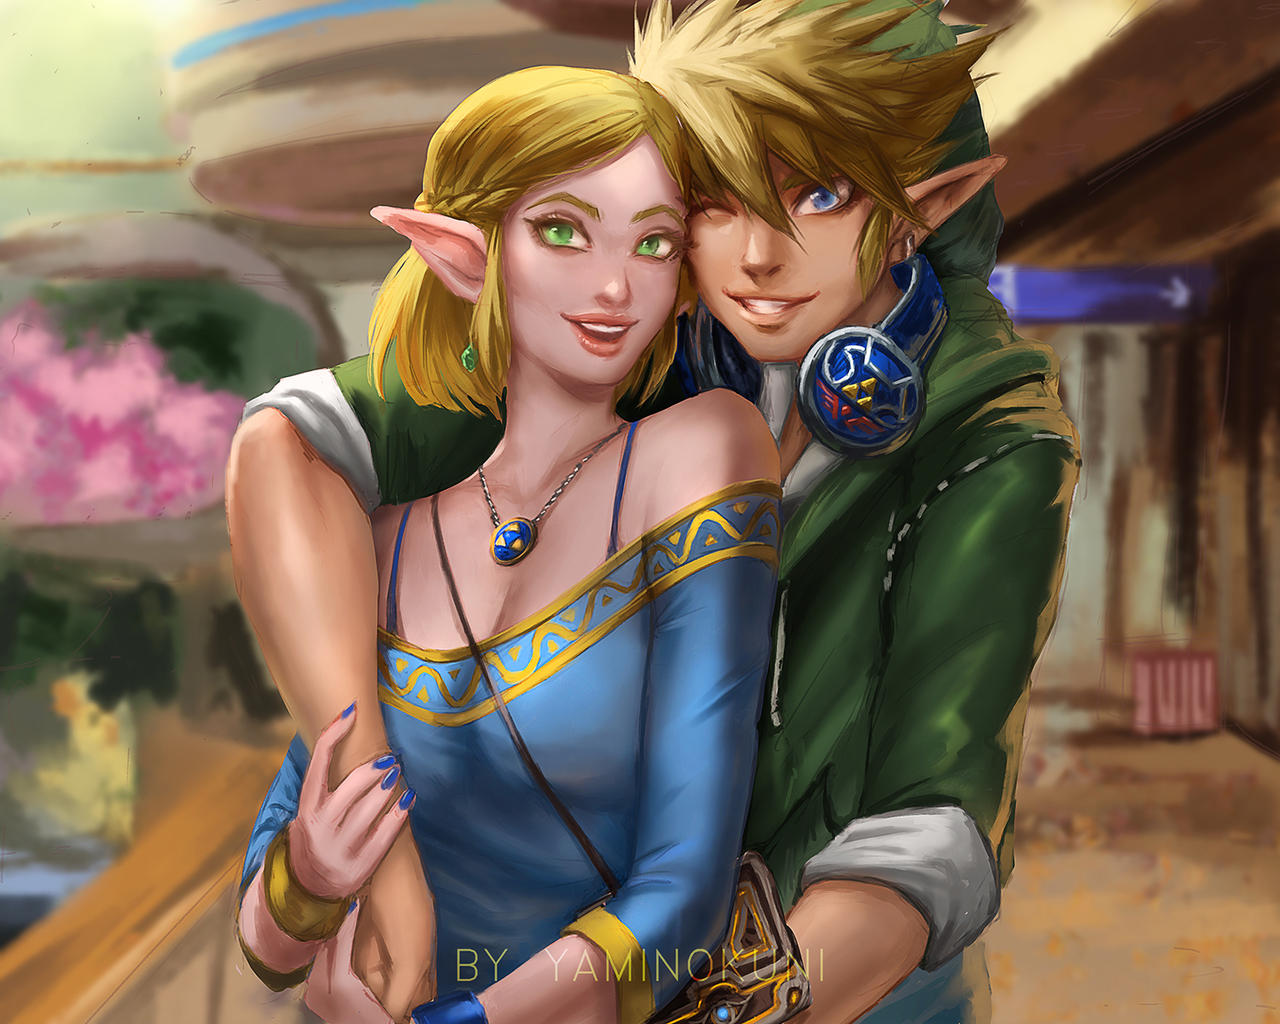 Link X Zelda by yaminokuni on DeviantArt